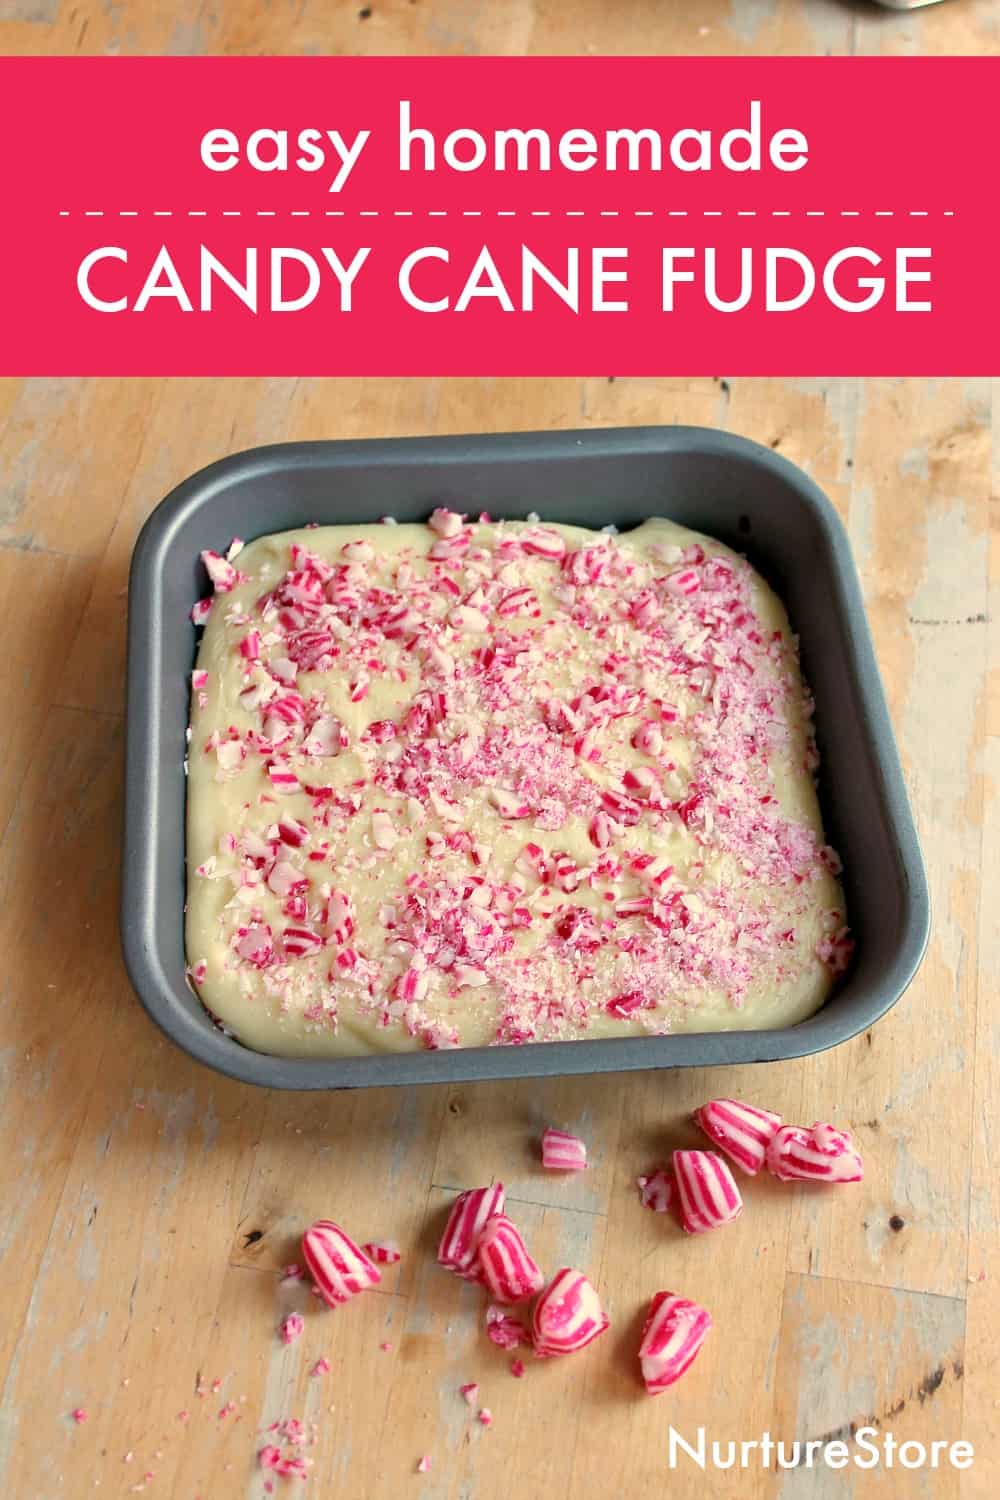 Easy homemade candy cane fudge recipe - NurtureStore